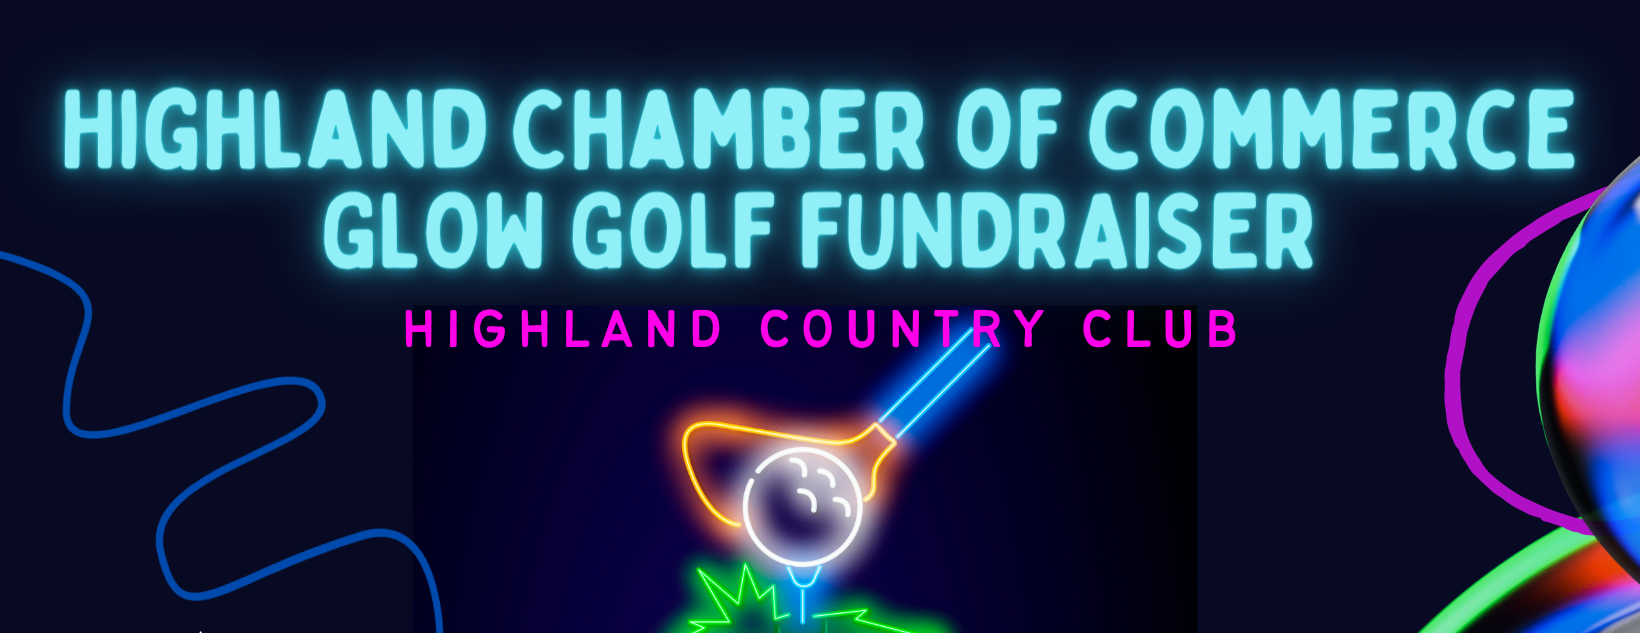 Highland Chamber of Commerce GLOW GOLF Fundraiser